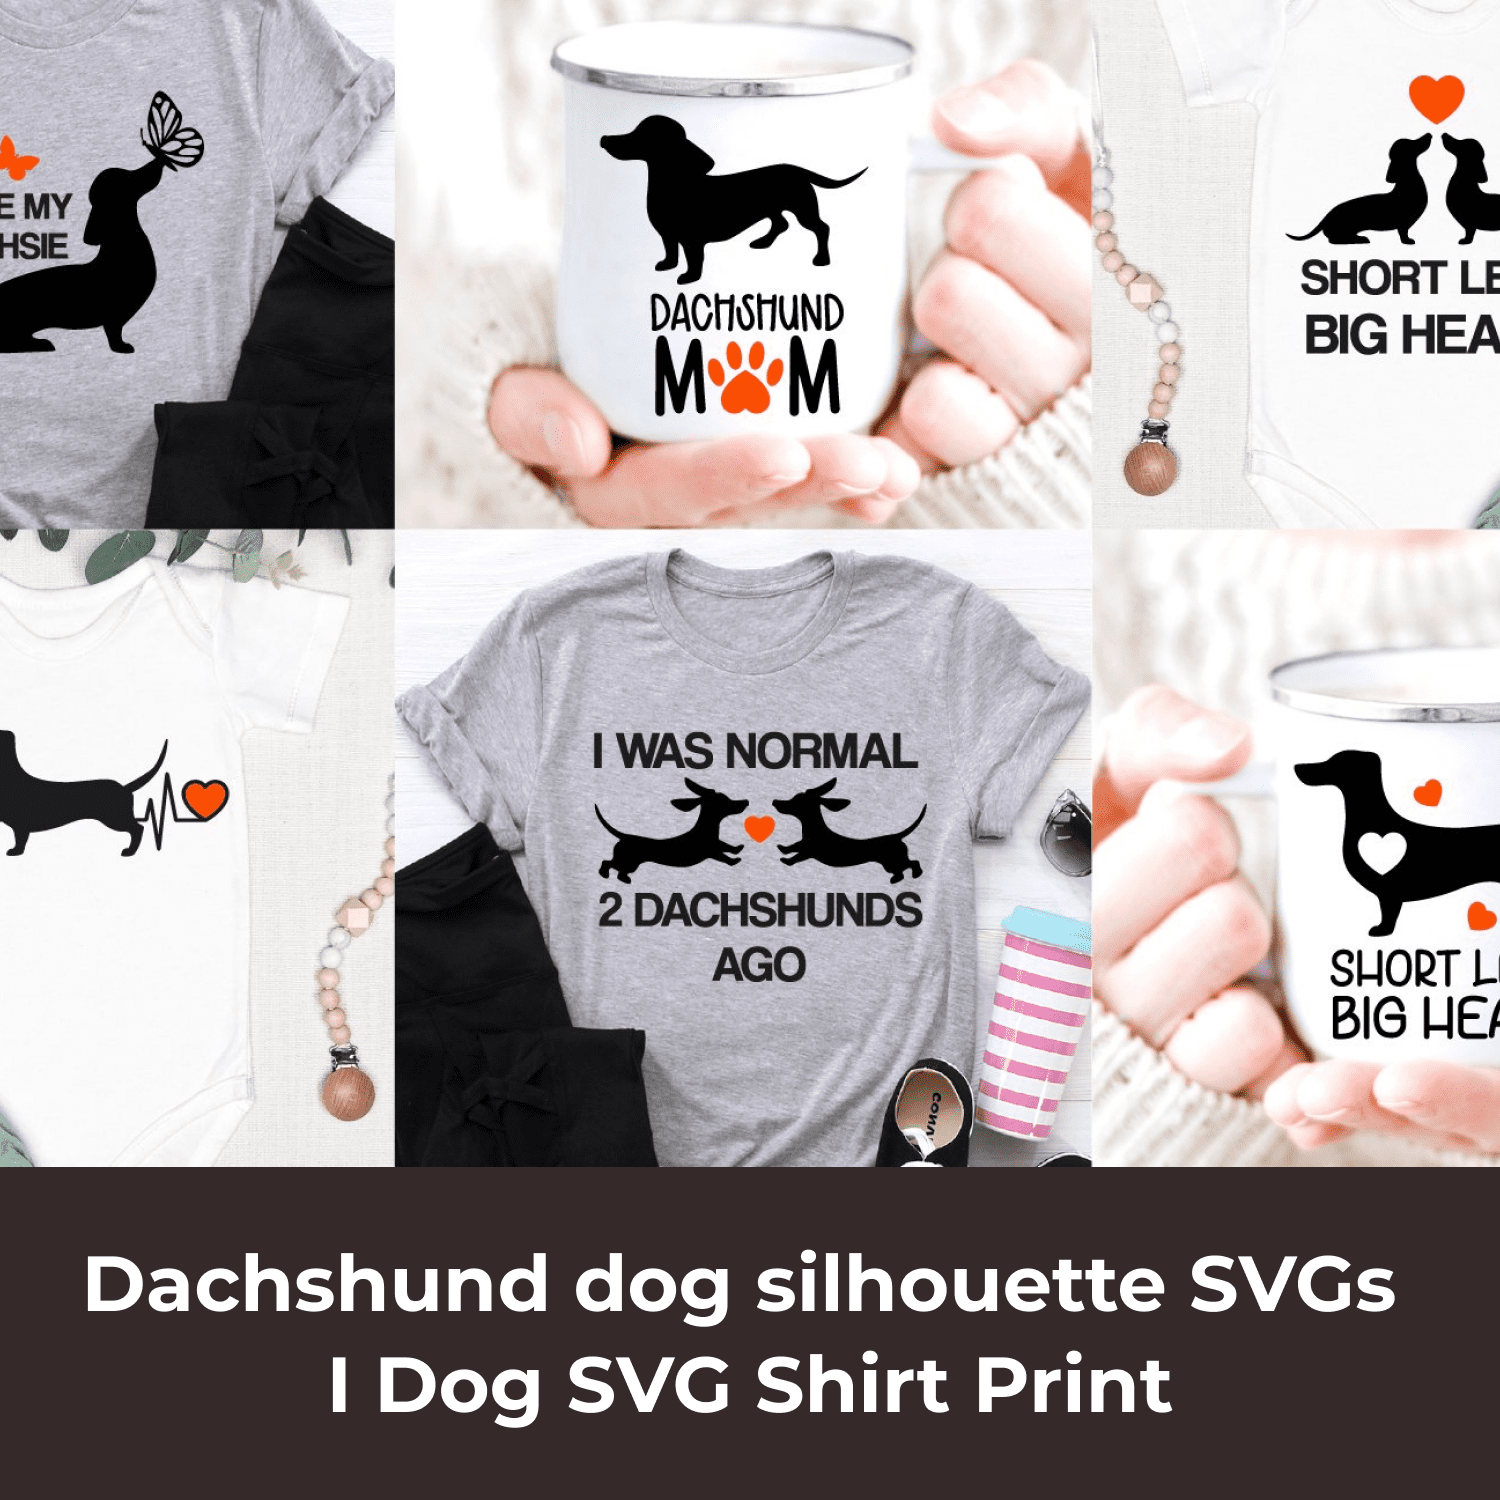 Dachshund dog silhouette SVGs I Dog SVG Shirt Print cover image.